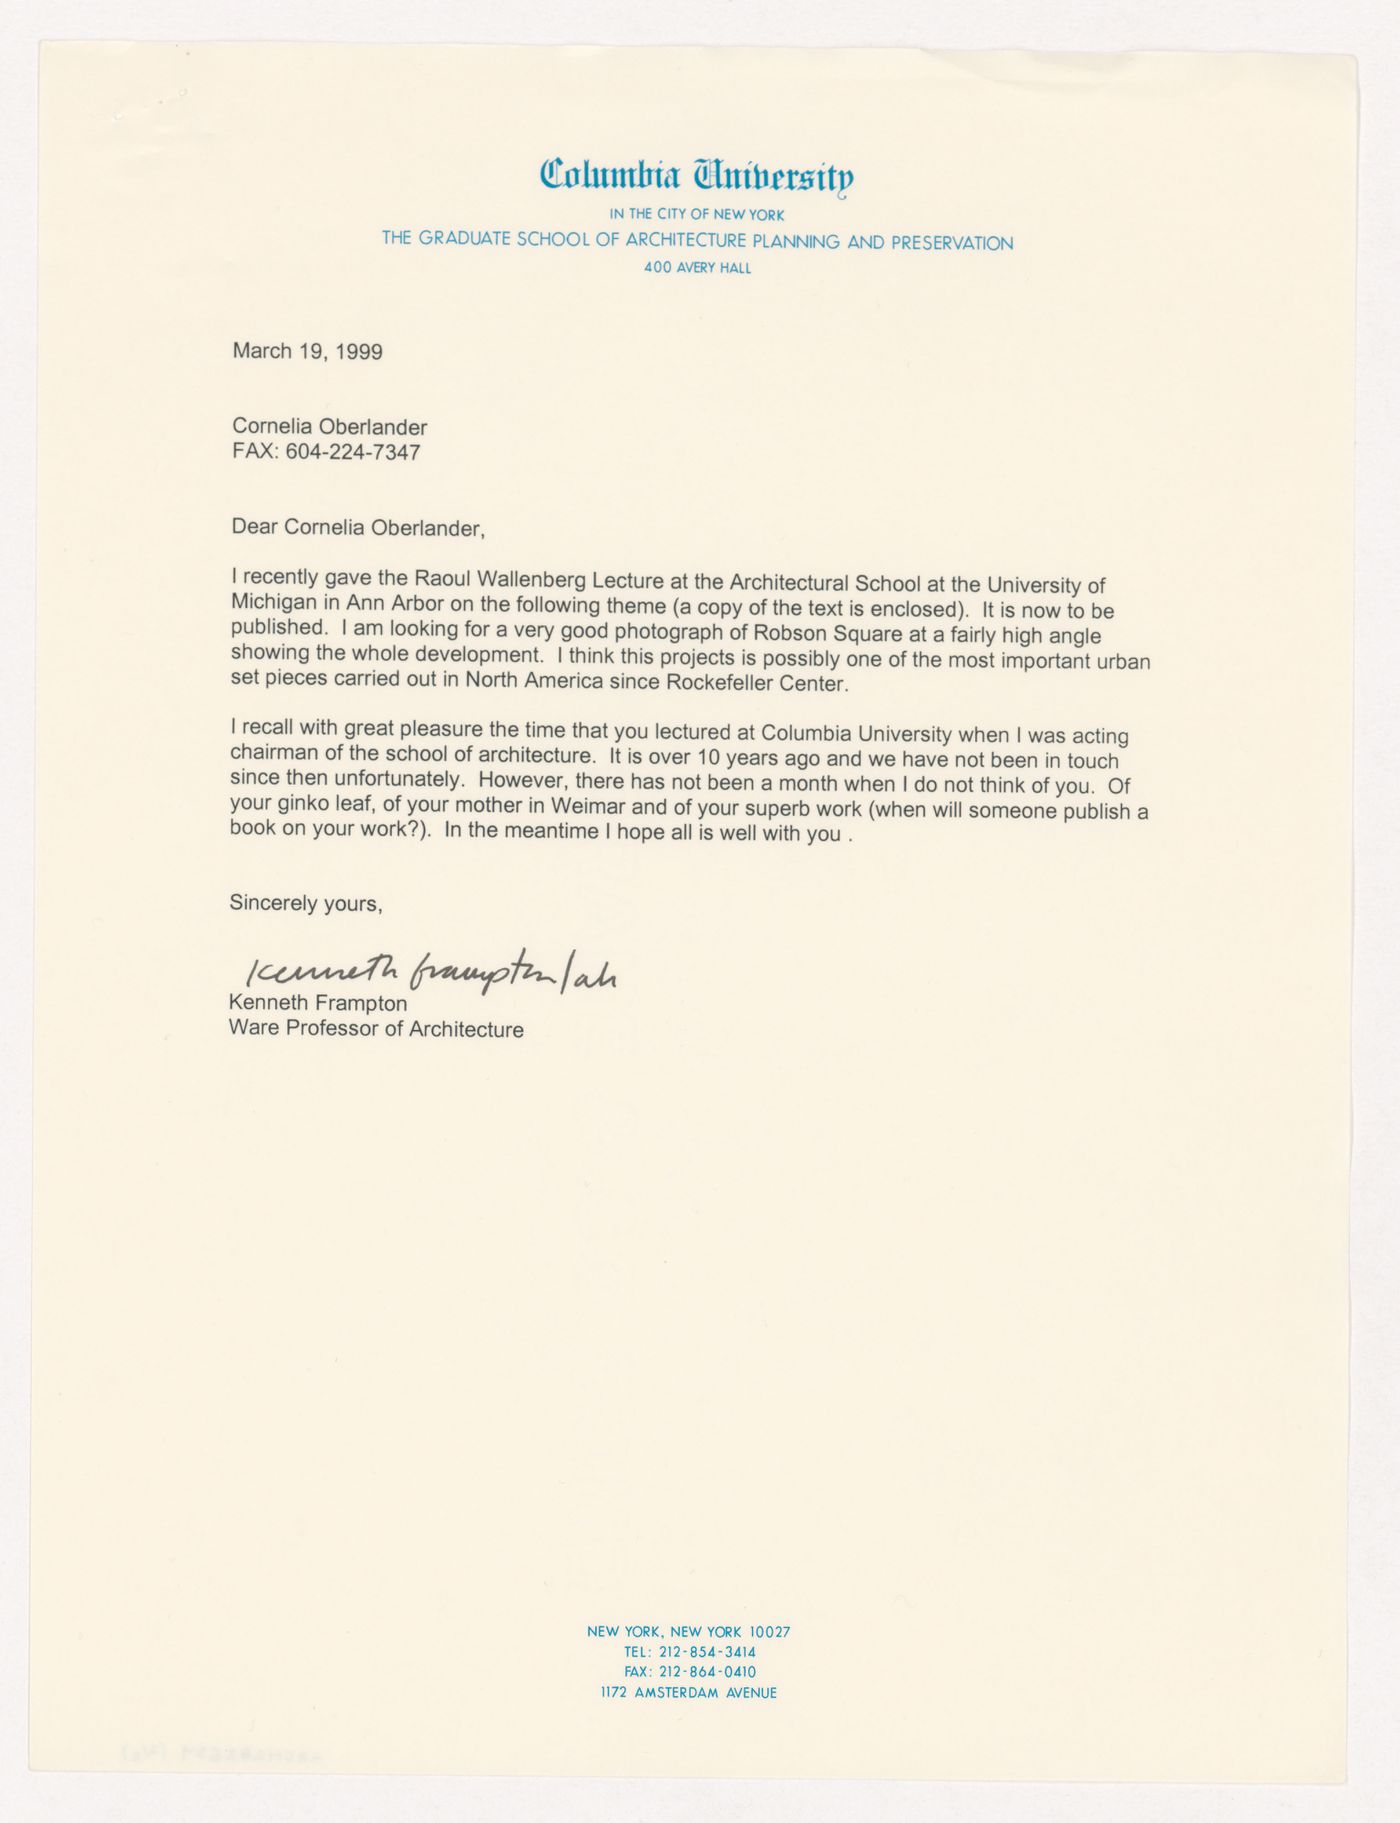 Letter from Kenneth Frampton to Cornelia Oberlander